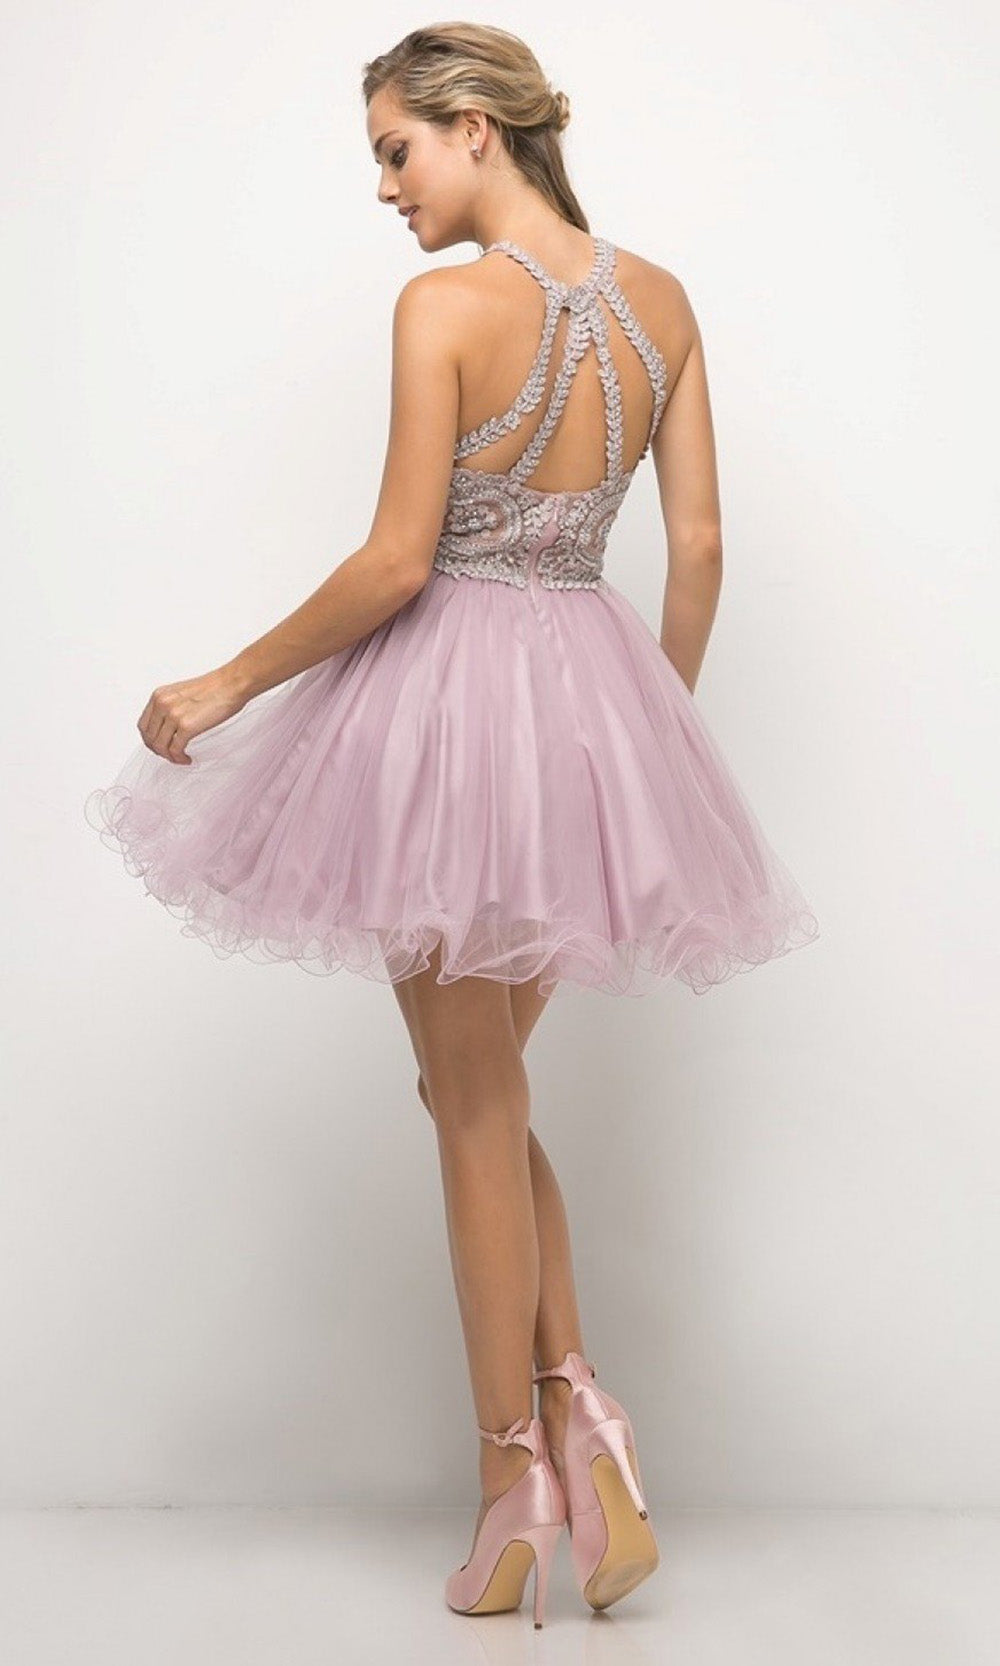 Cinderella Divine - UJ0119 Applique Strappy Back Dress In Mauvegrade 8 grad dresses, graduation dresses